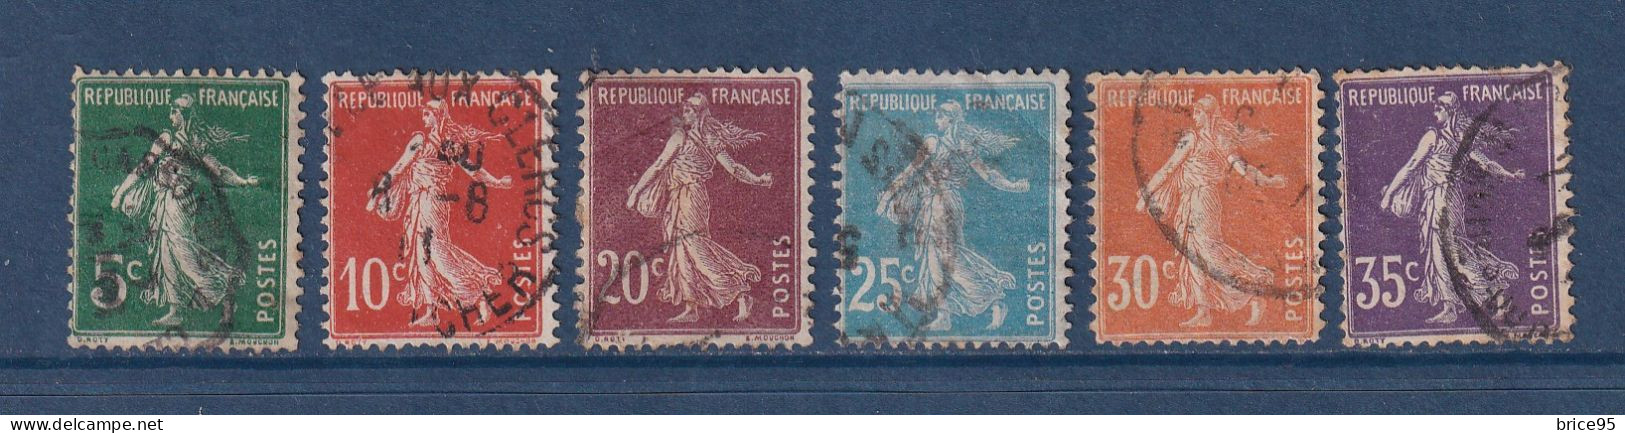 France - YT N° 137 à 142 - Oblitéré - 1907 - Usati